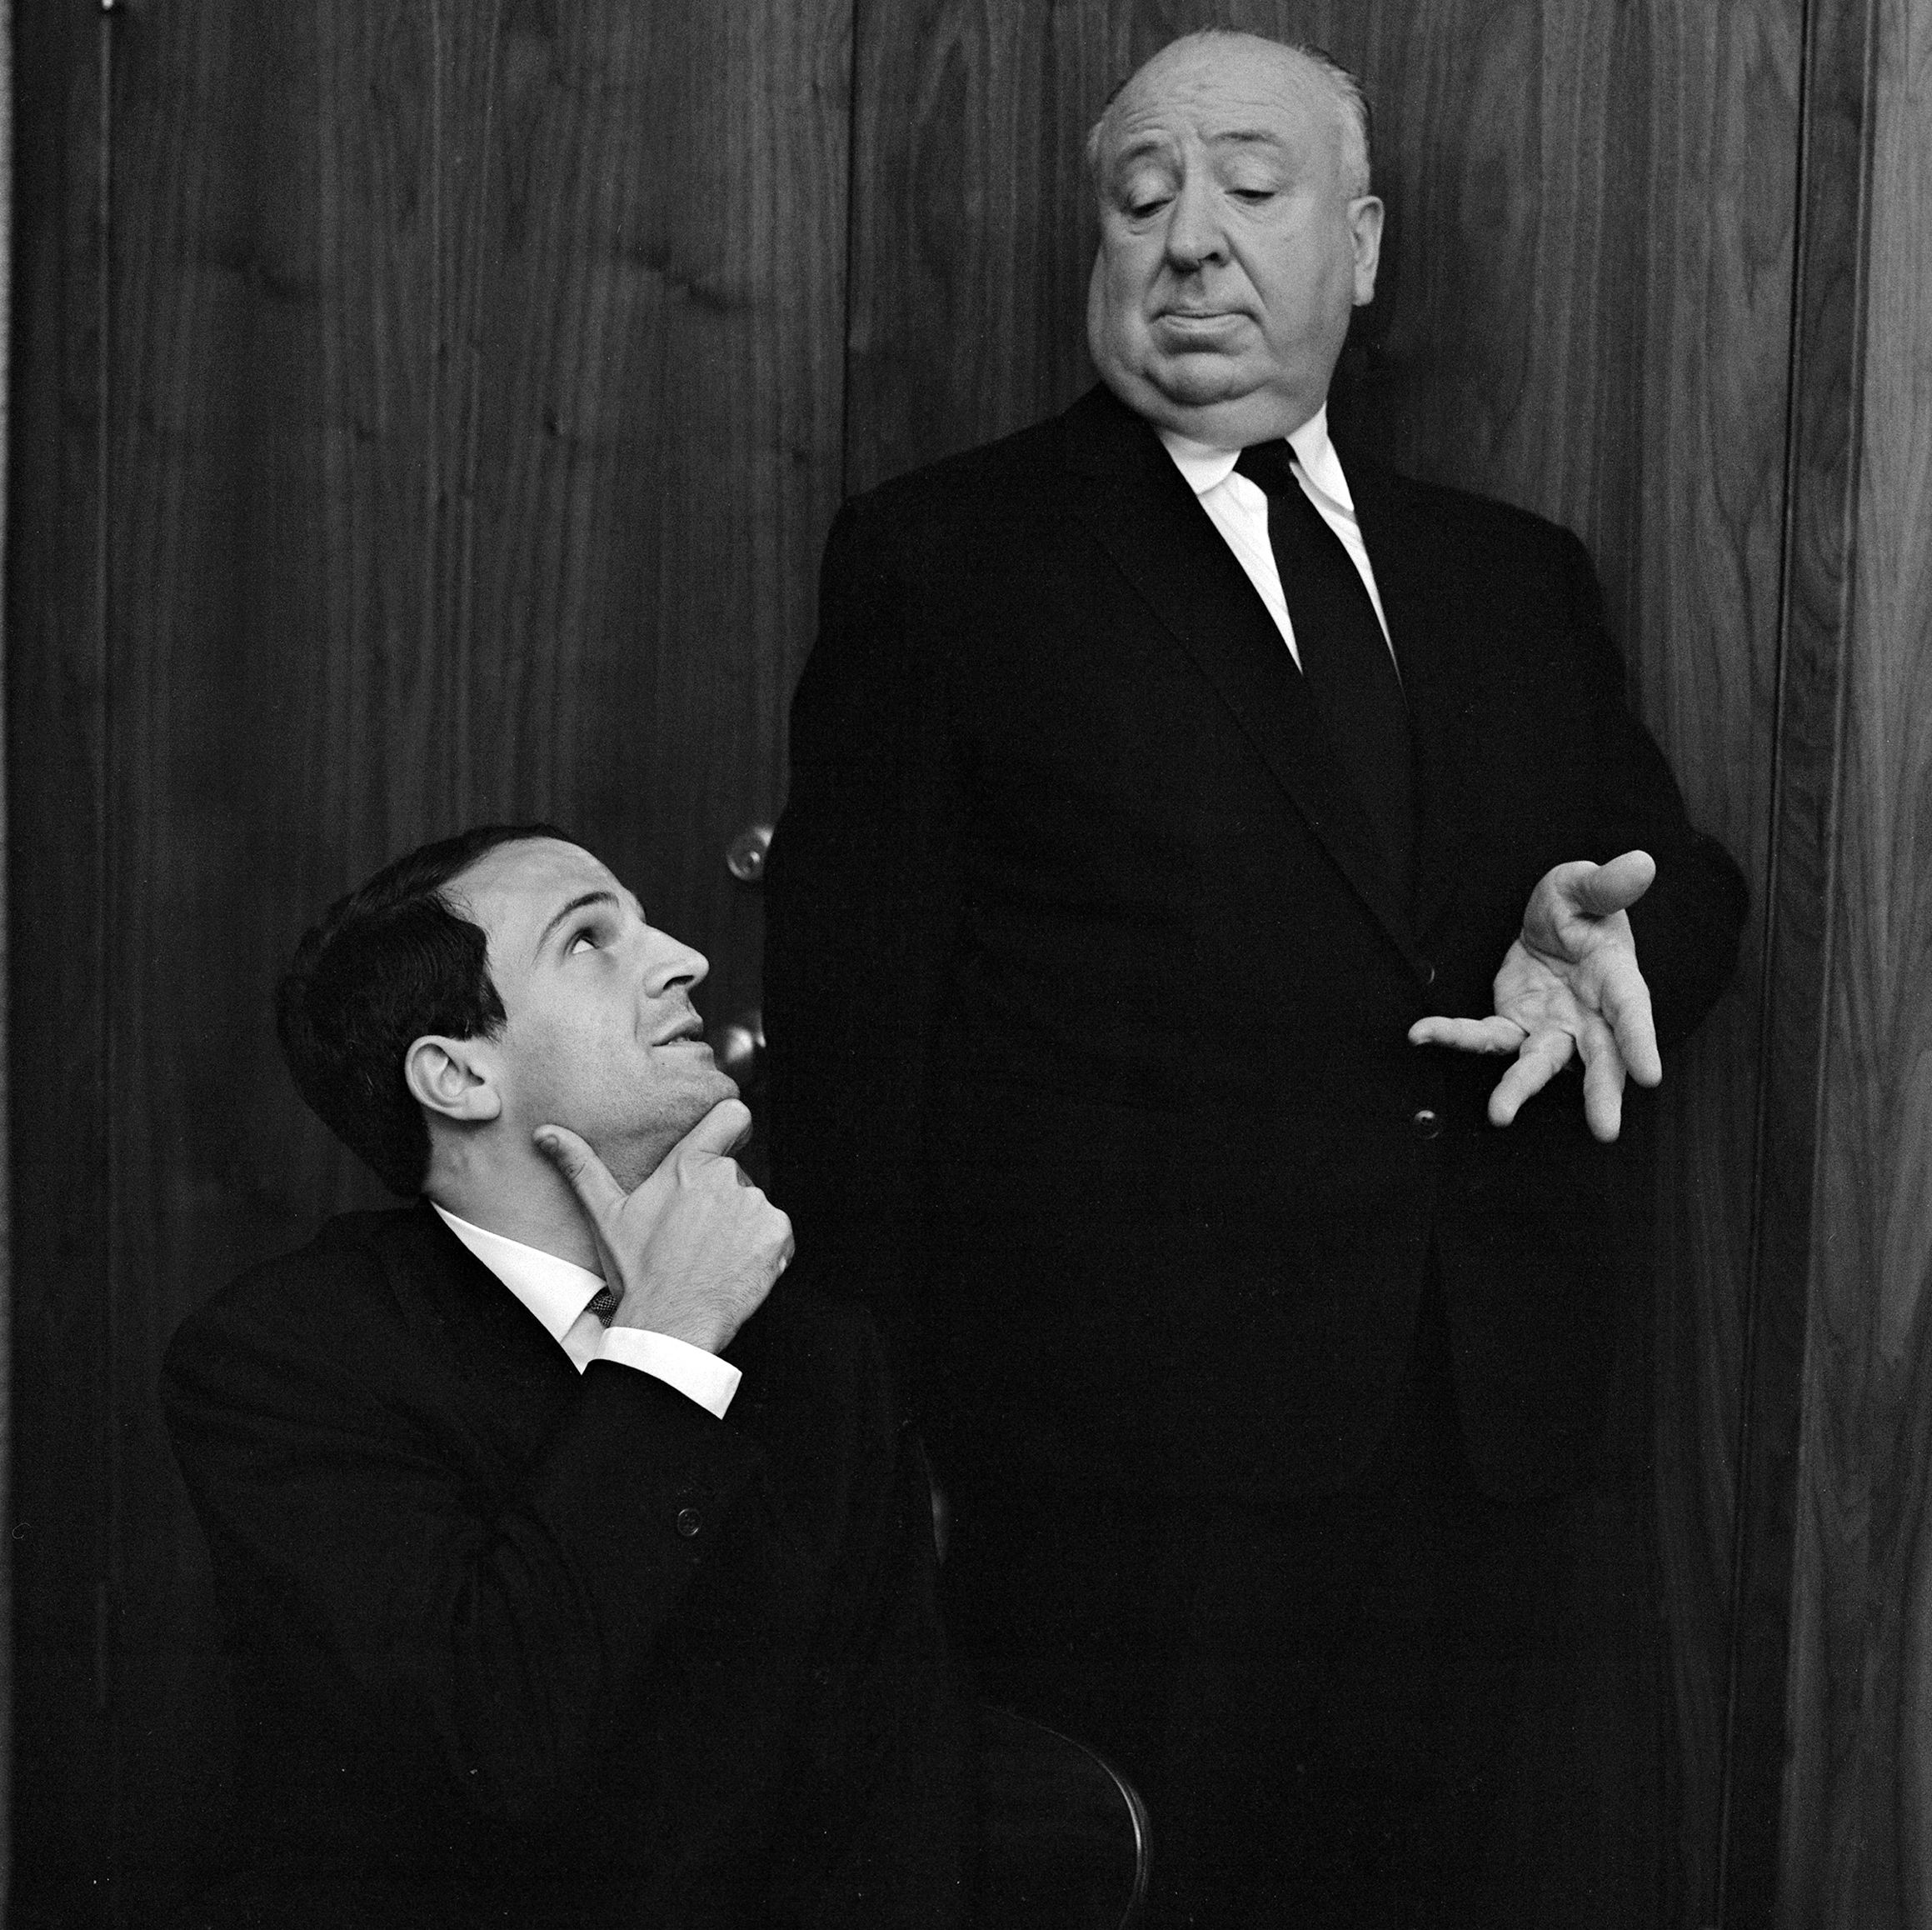 Truffaut and Hitchcock